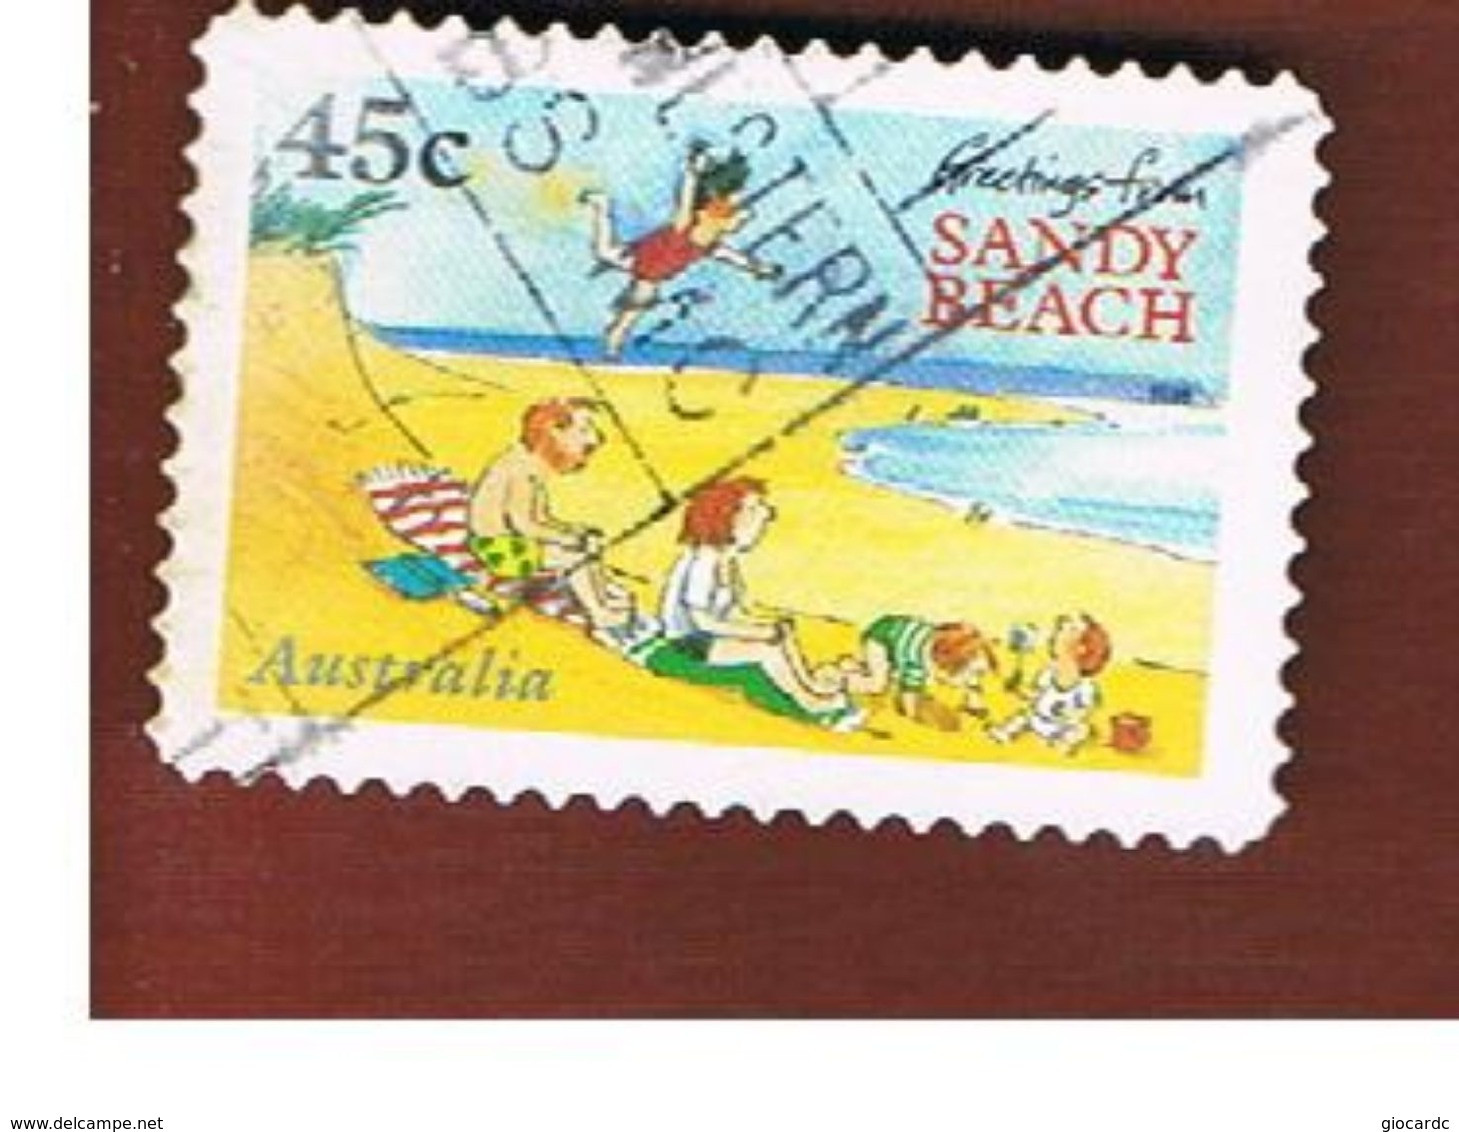 AUSTRALIA  -  SG 1635 -      1996  BOOKS FOR CHILDREN: SANDY BEACH         -       USED - Oblitérés